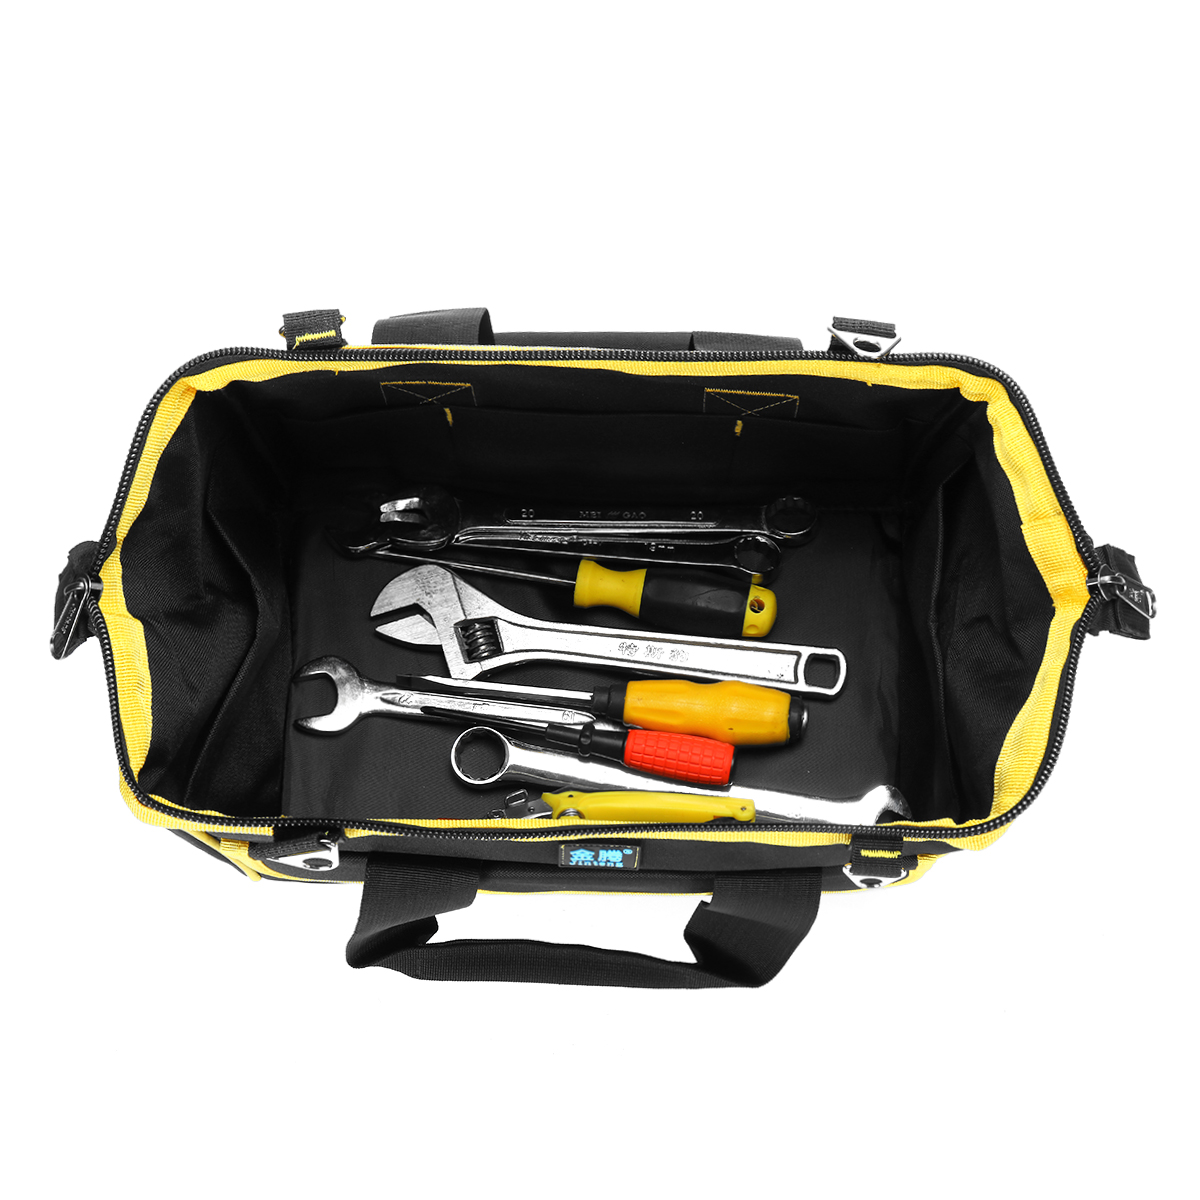 Storage-Tool-Bag-Hard-Bottom-Heavy-Duty-Toolbag-Repair-Hardware-Kit-1658757-9